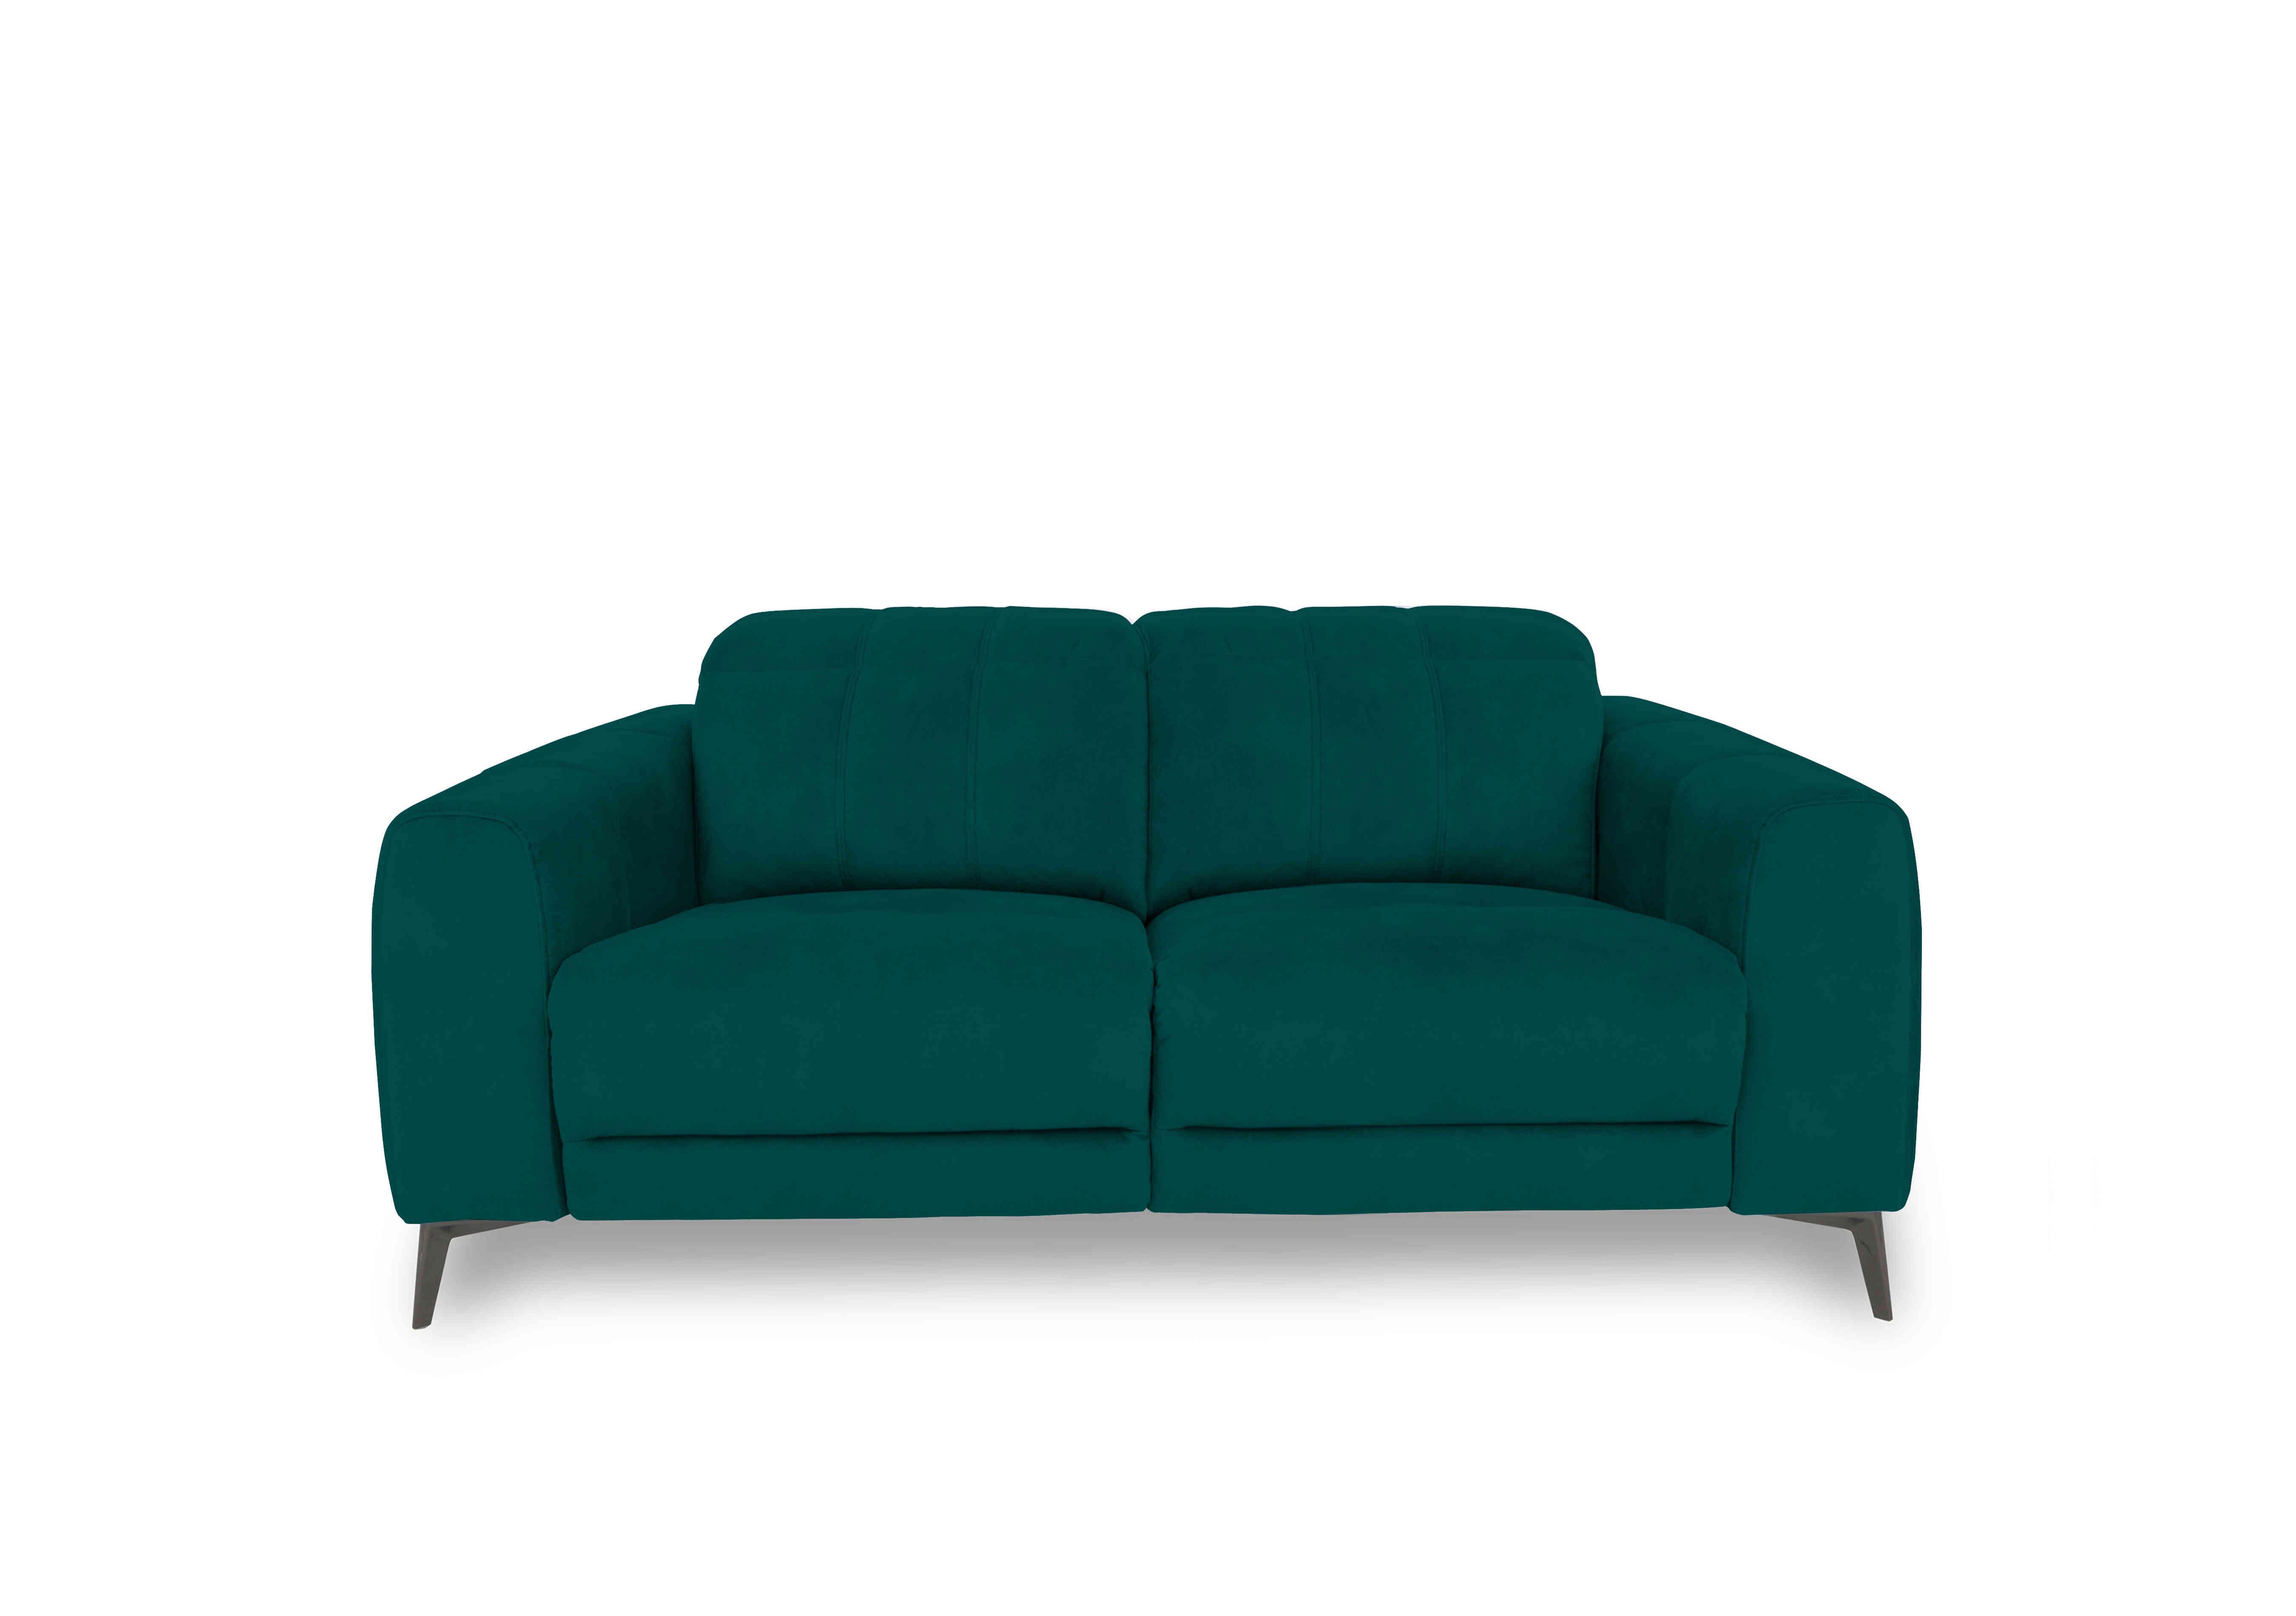 Ezra 2 Seater Fabric Sofa in Opulence 51003 Teal on Furniture Village